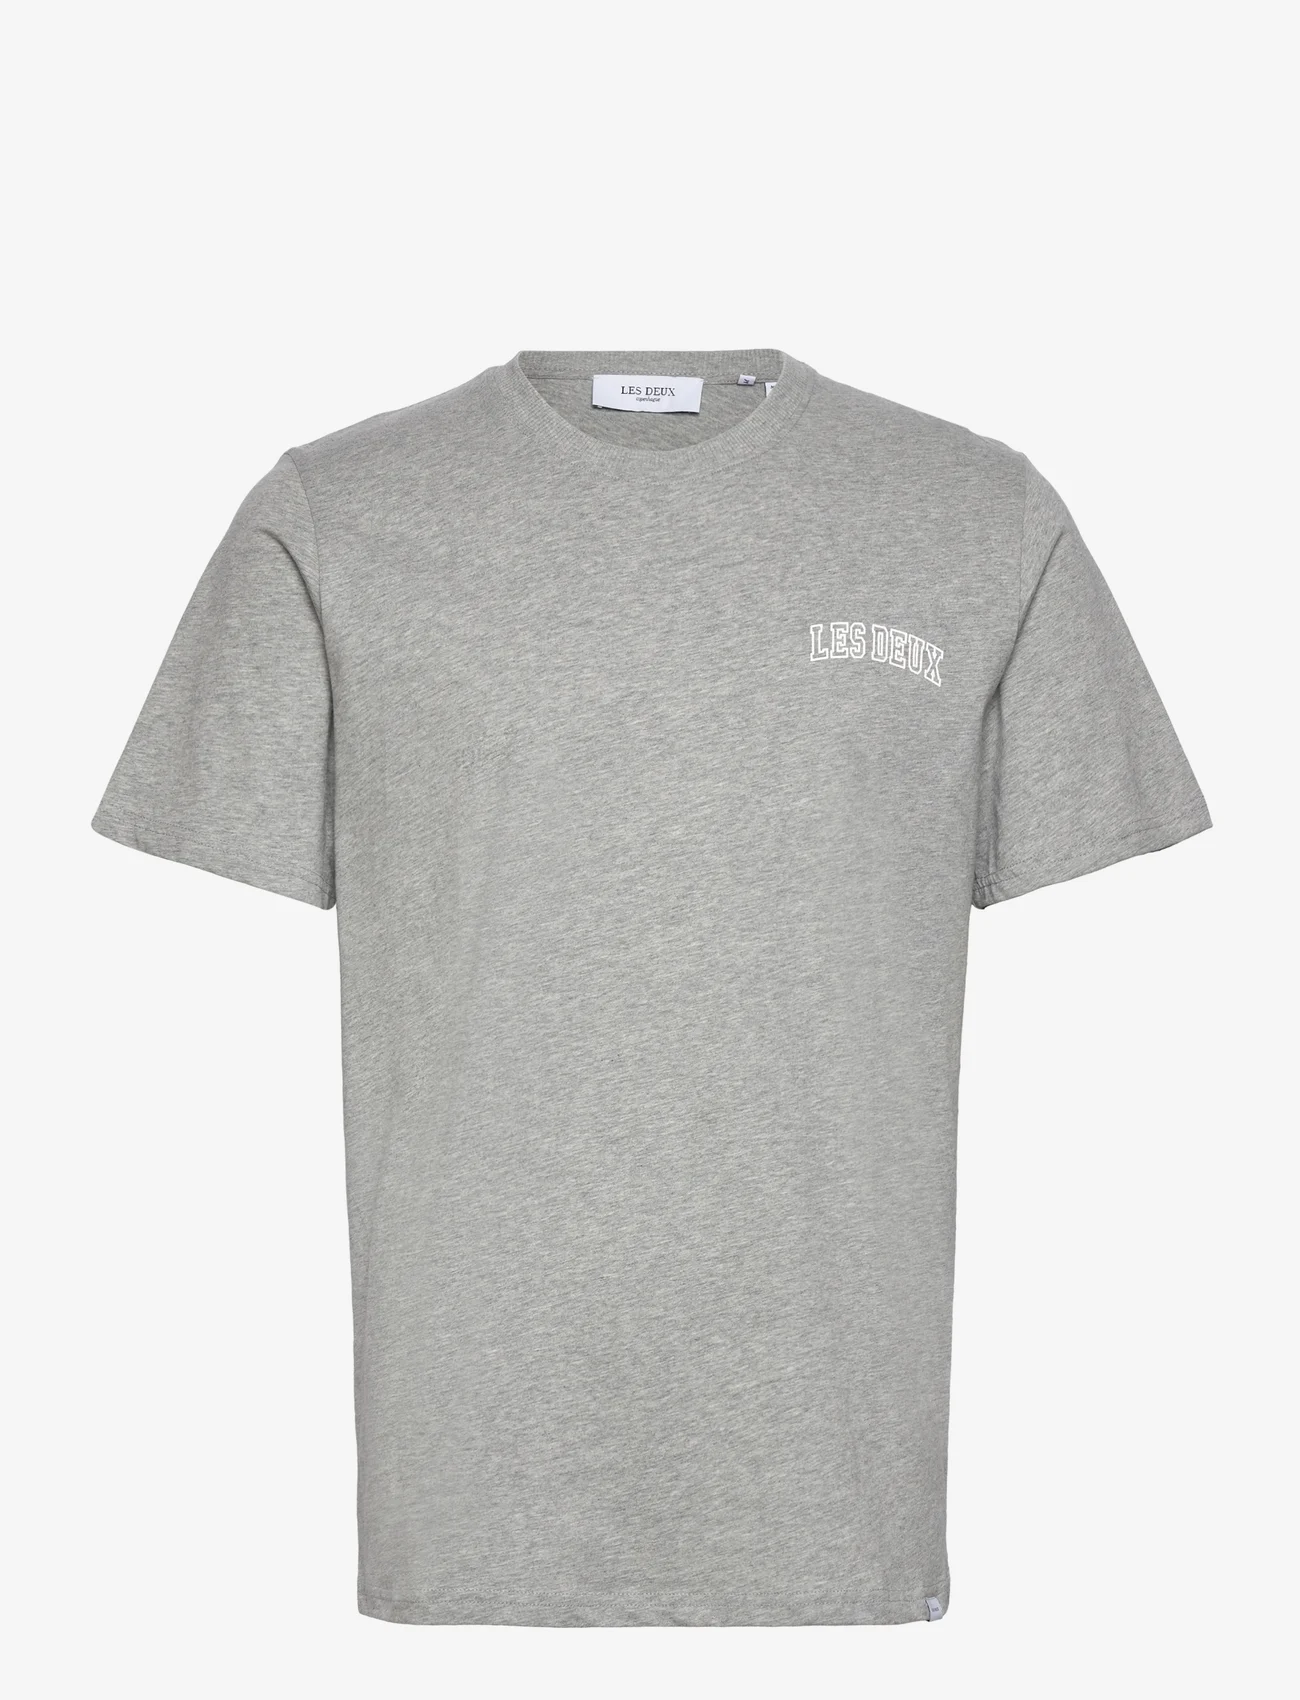 Les Deux - Blake T-Shirt - basic t-shirts - grey mélange/white - 0